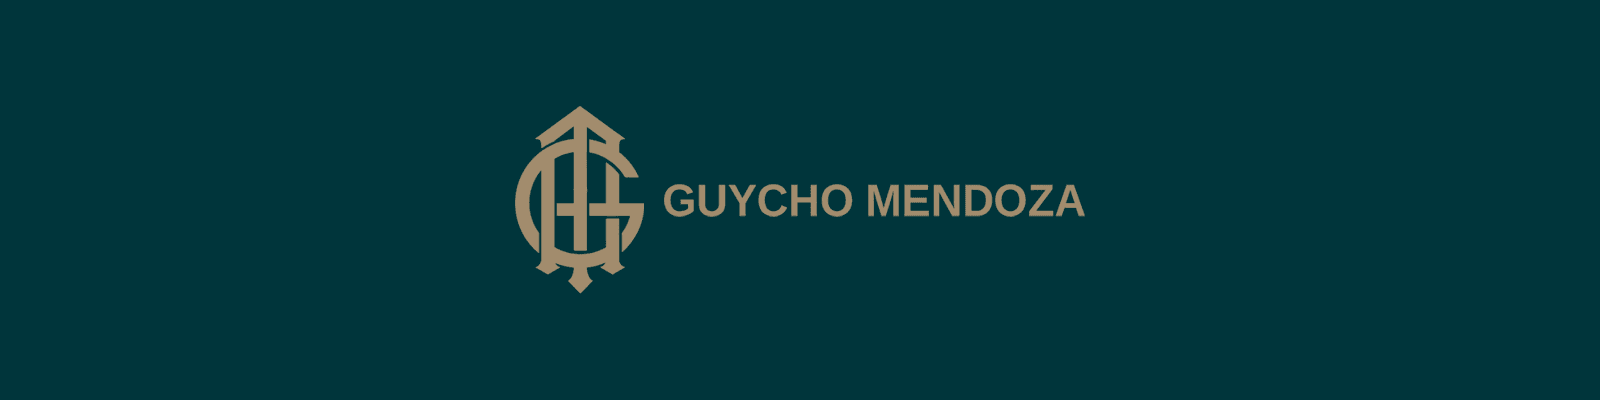 GuychoMendoza bannière